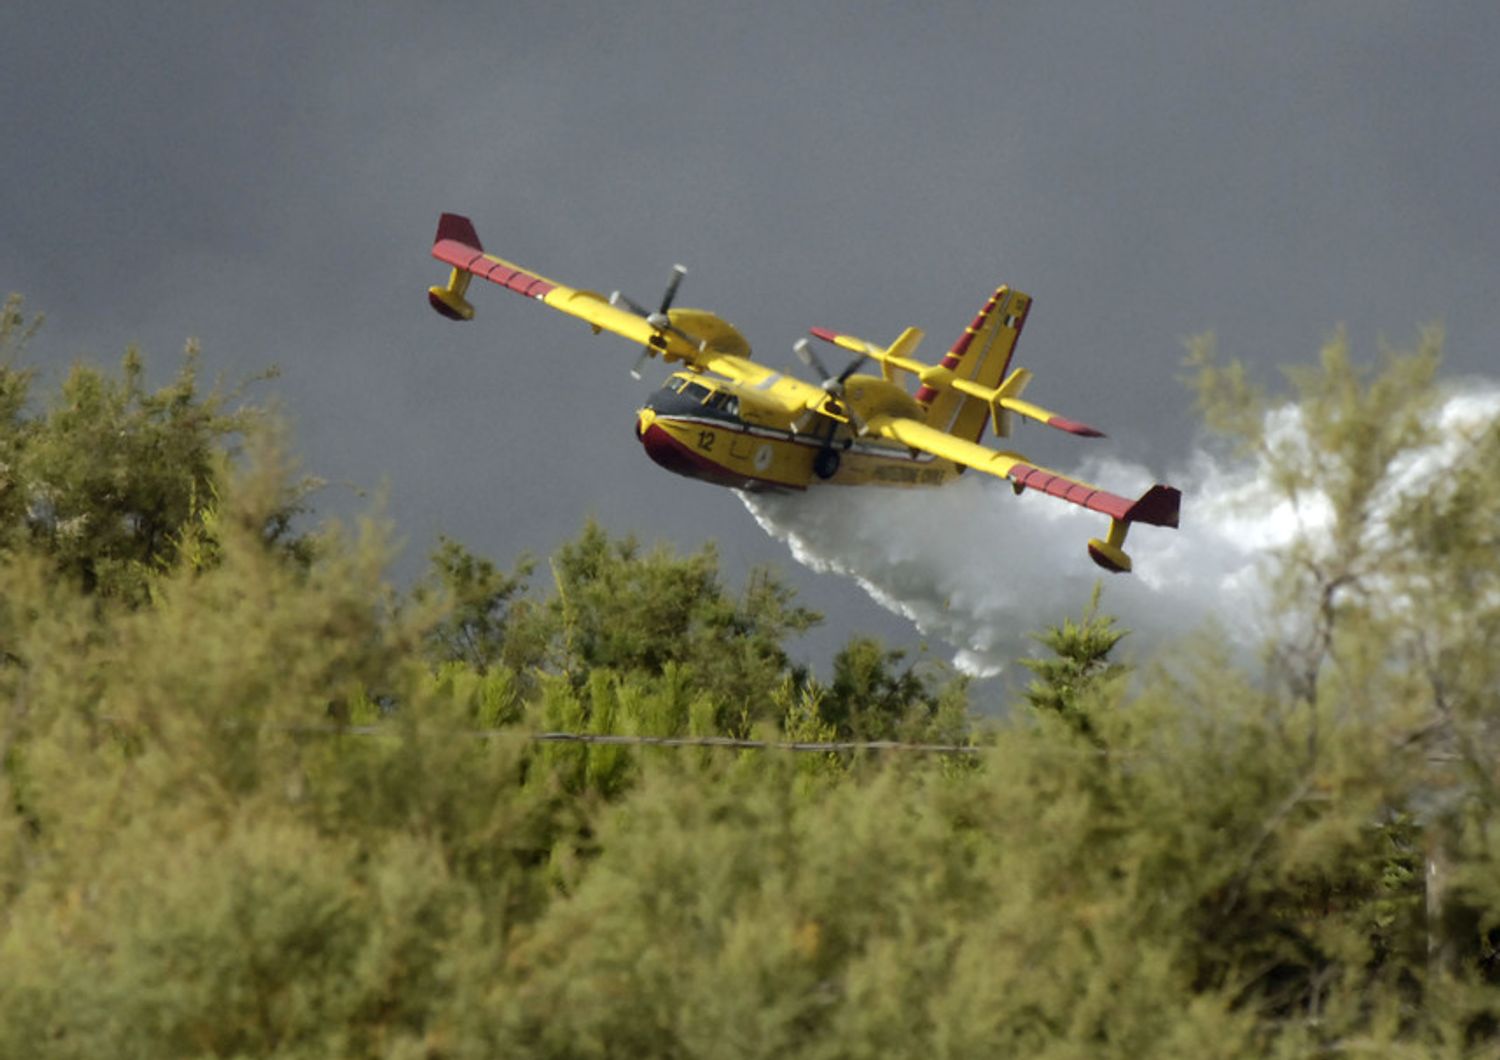 Incendi boschivi Canadair Protezione civile (Agf)